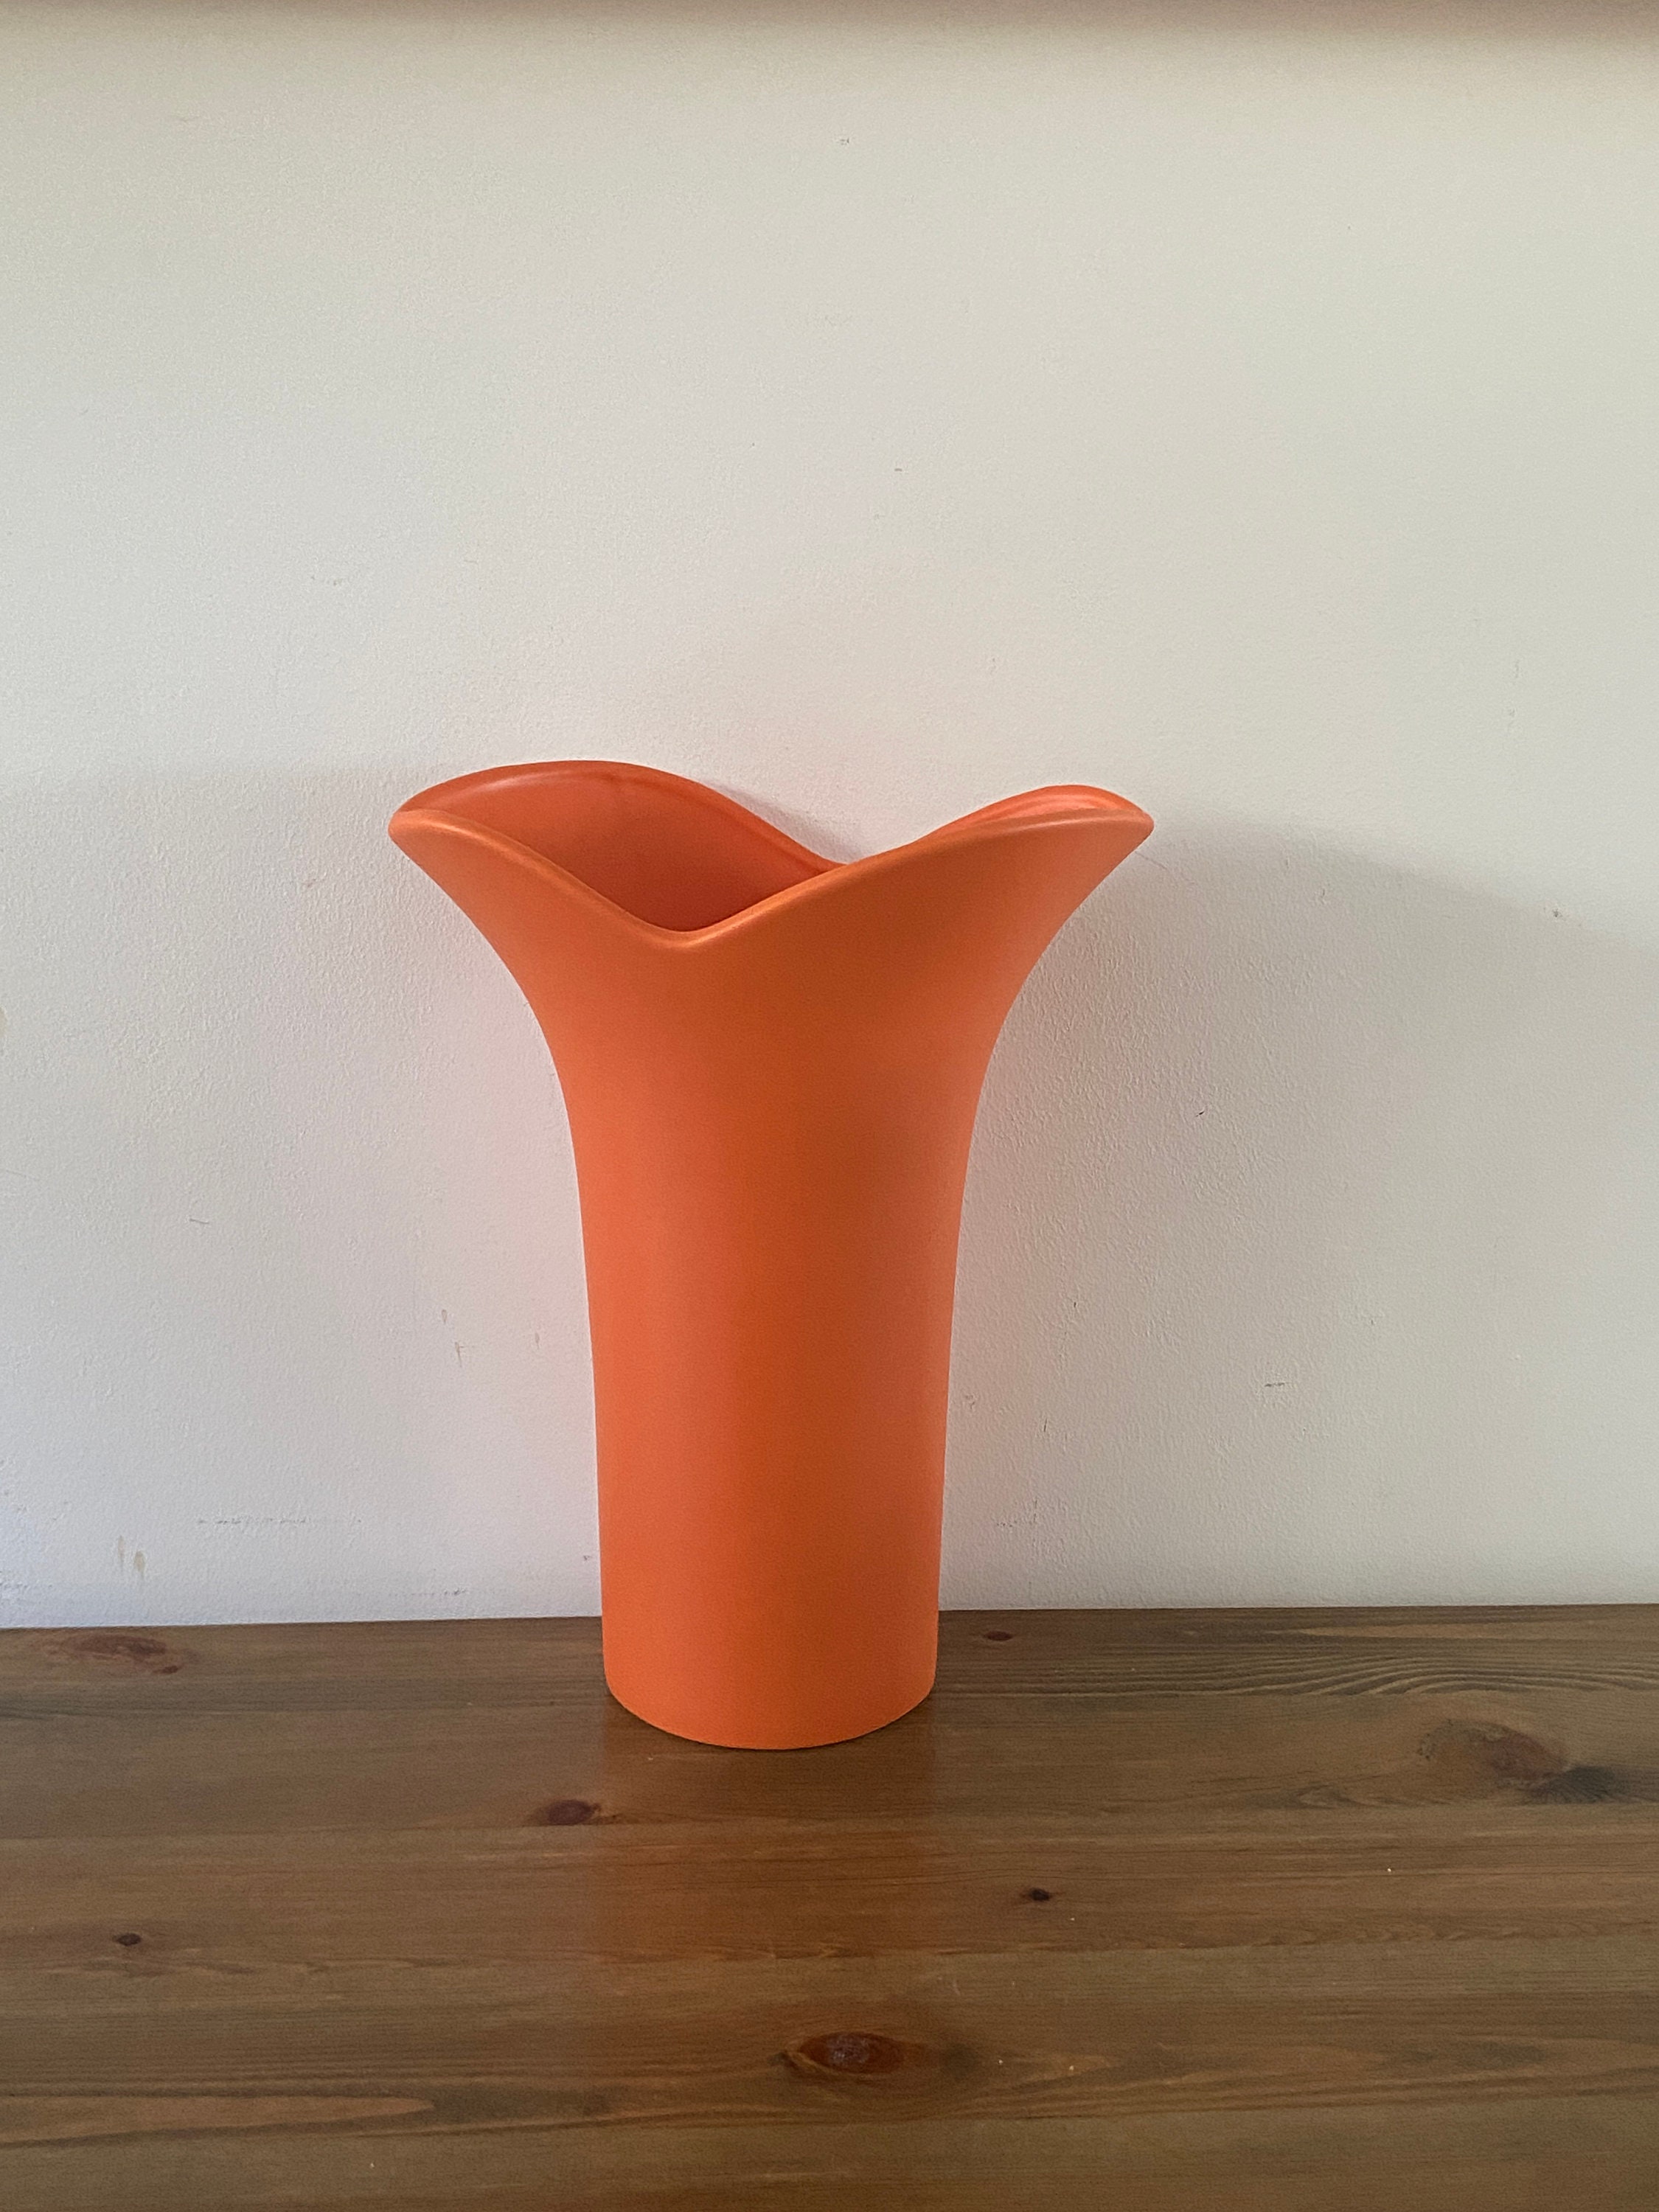  Orange Juice Vase, 2 Vase Set. Ceramic Vase and Sliced Orange  Vase. Unique Vases for Flowers. Funky Home Decor. Colorful Vintage Retro  Weird Eclectic Groovy Cool Kawaii Room Maximalist Decor 